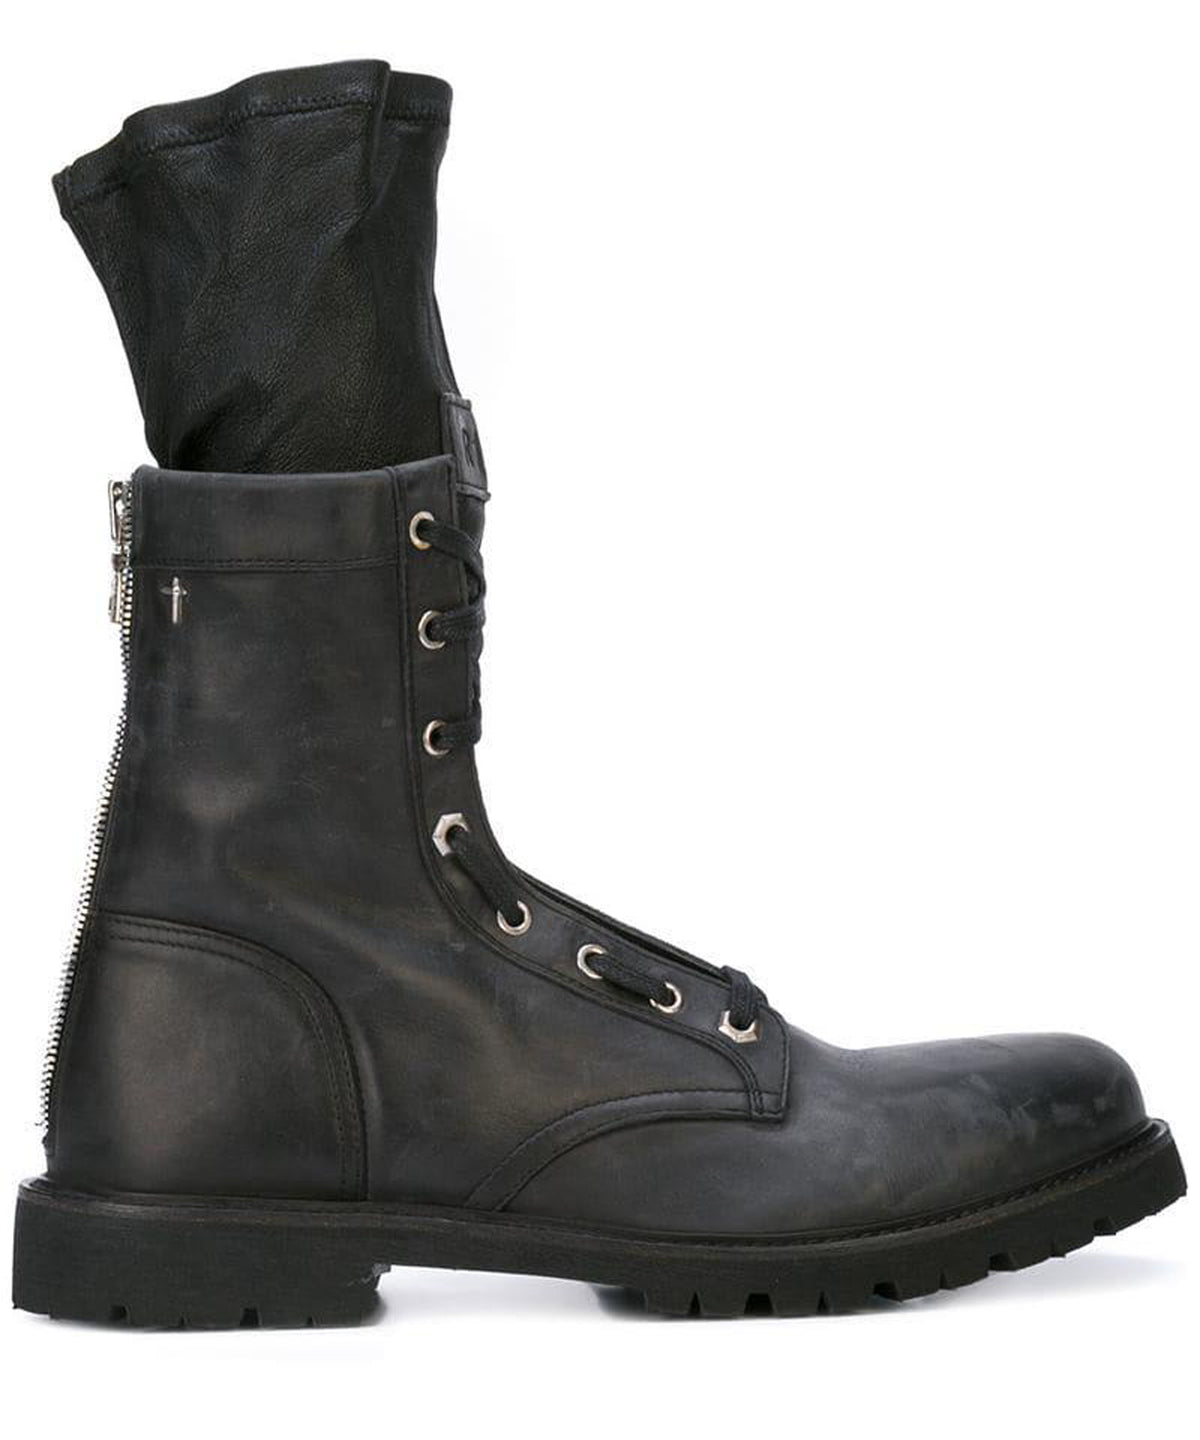 Rta Hybrid Combat Black Boots 